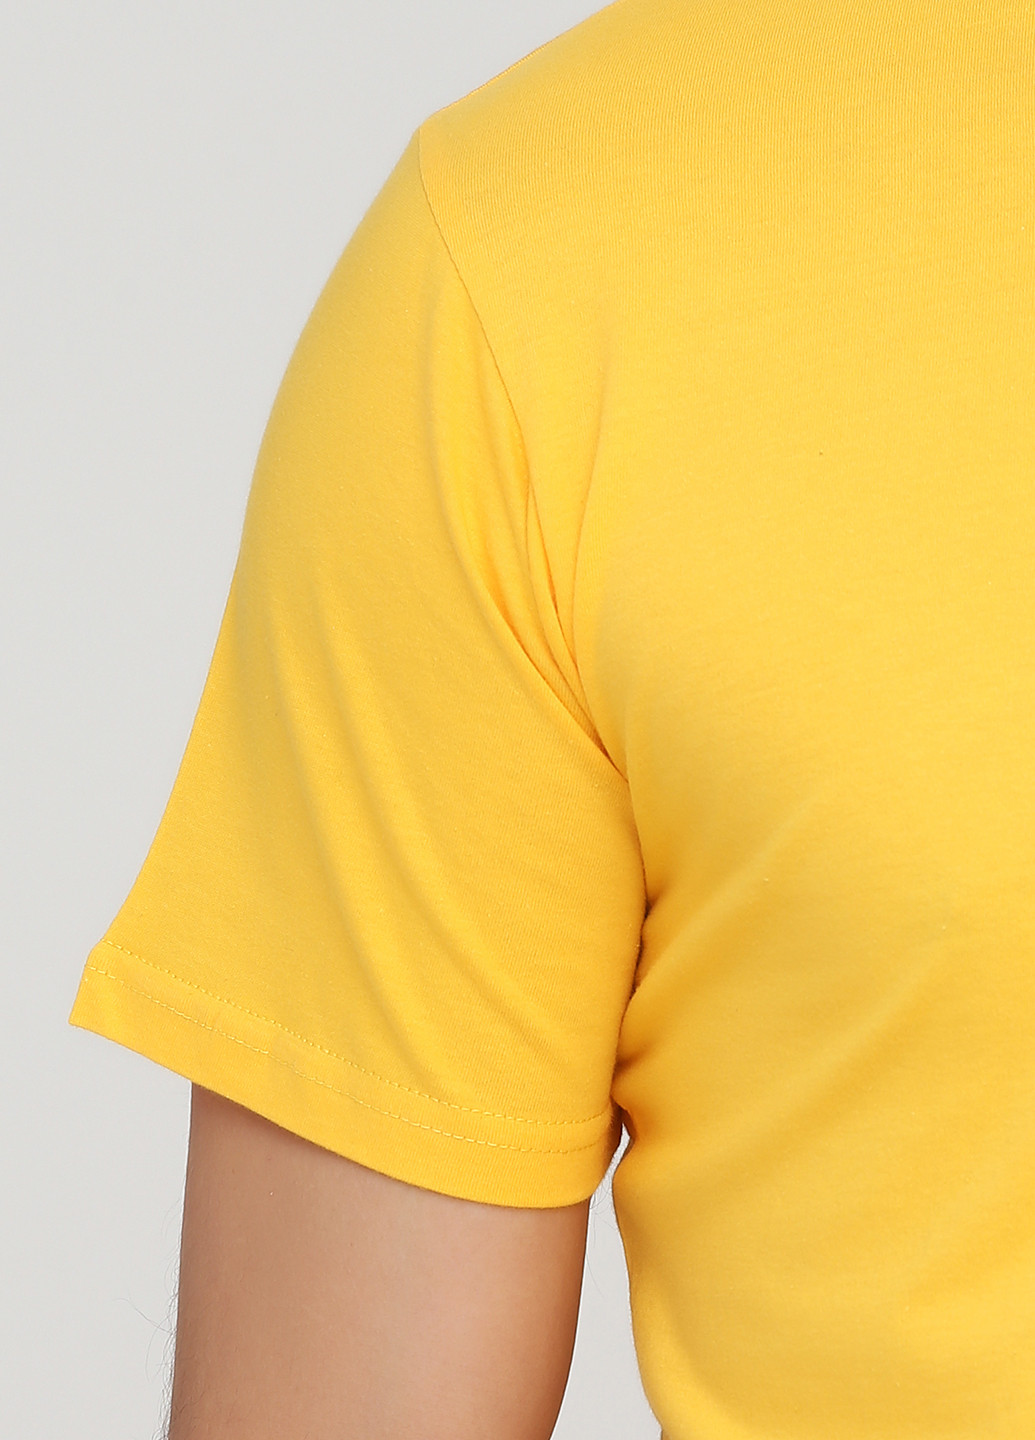 Желтая футболка мужская 19м319-17 синяя(електро) с коротким рукавом Malta